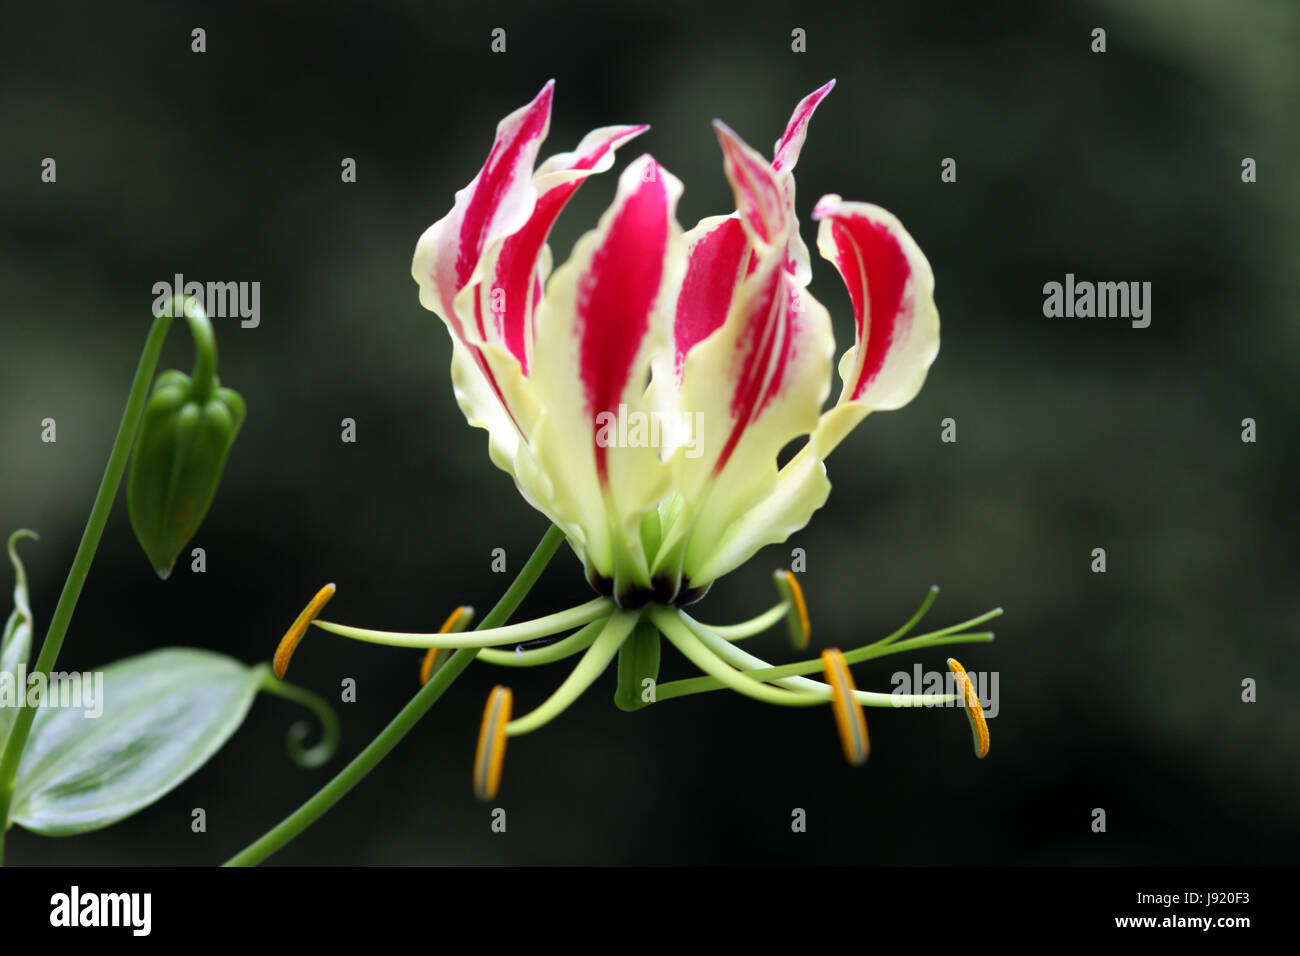 climbing plant, decorative plant, bloom, blossom, flourish, flourishing, Stock Photo